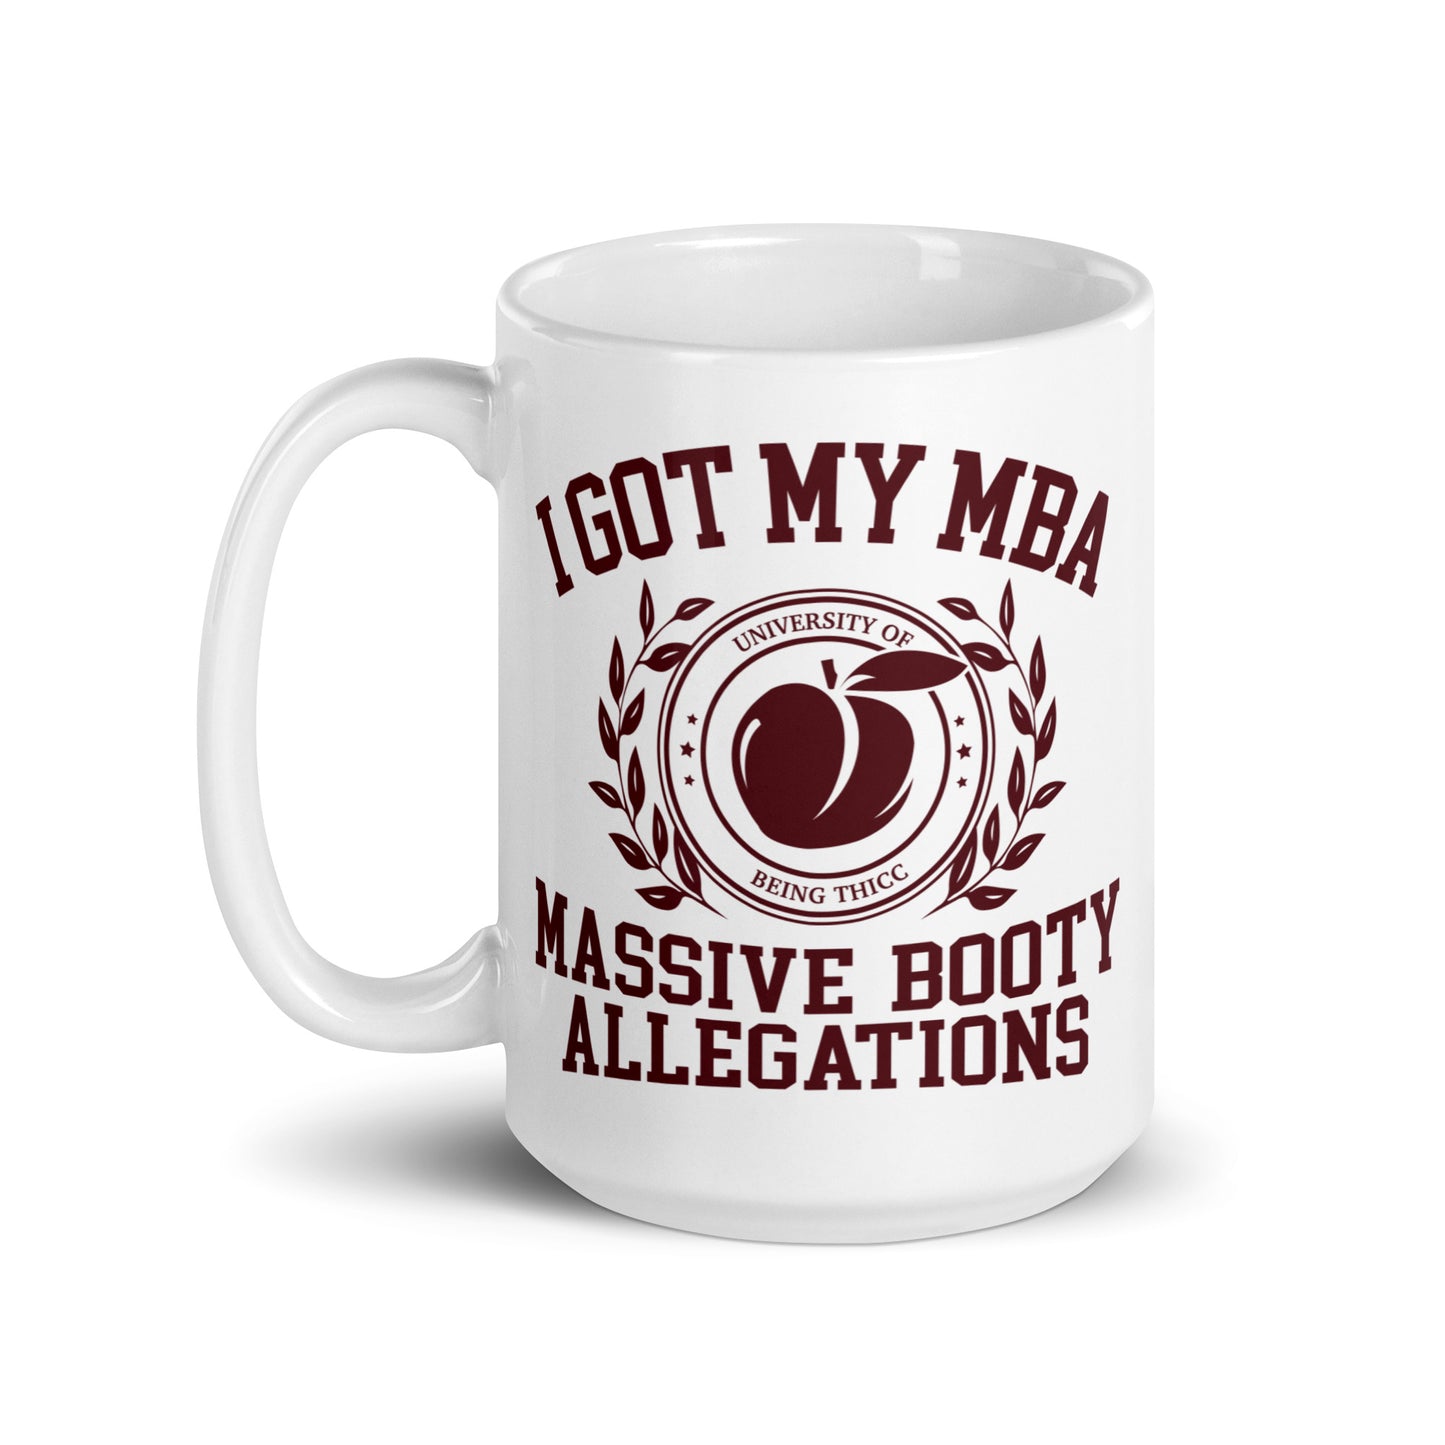 Massive Booty Allegations mug